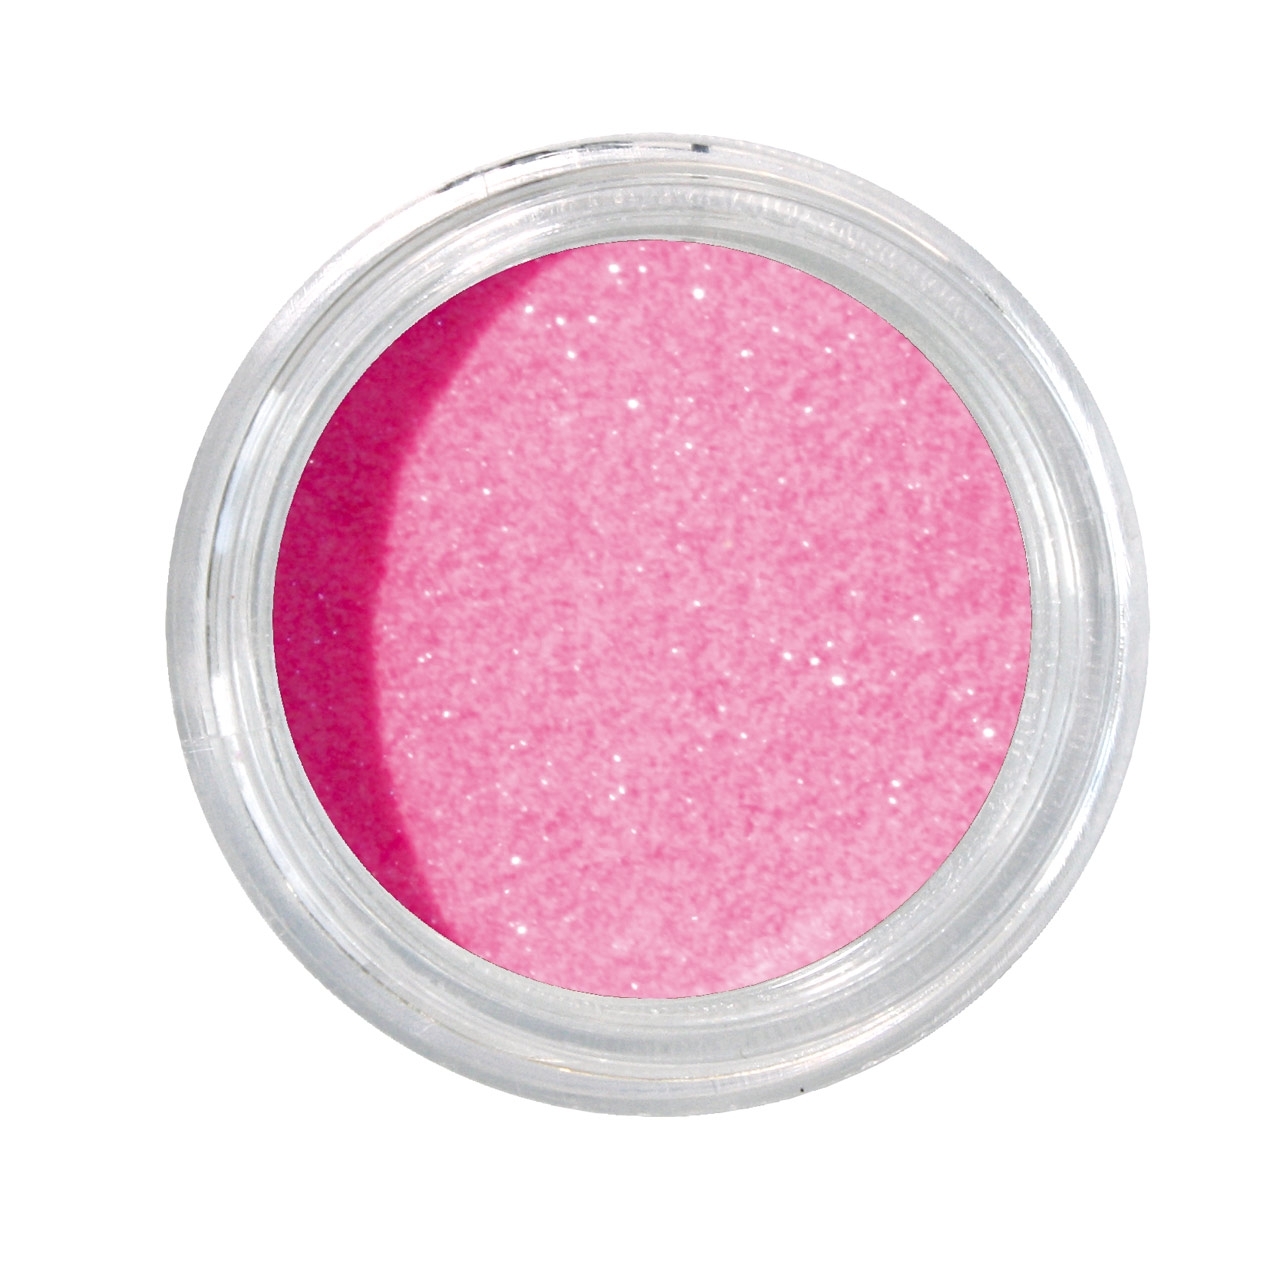 BAEHR BEAUTY CONCEPT NAILS Nail Art Glitterpulver neon pink